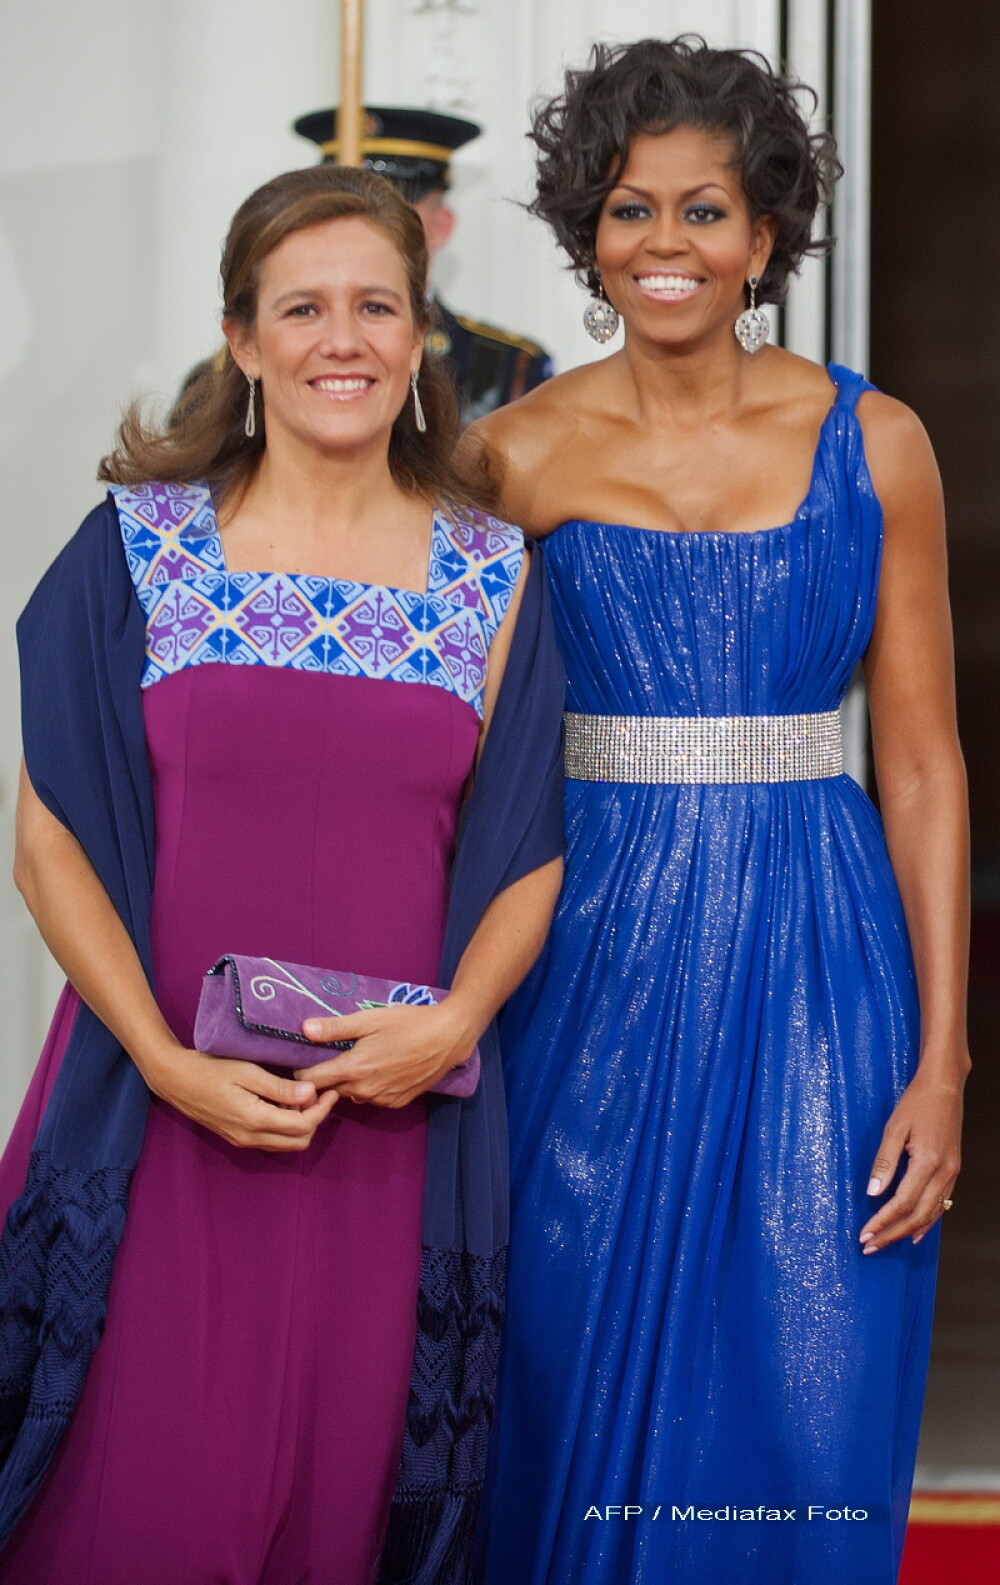 Eva Longoria si Michelle Obama au impresionat la dineul de la Casa Alba - Imaginea 9